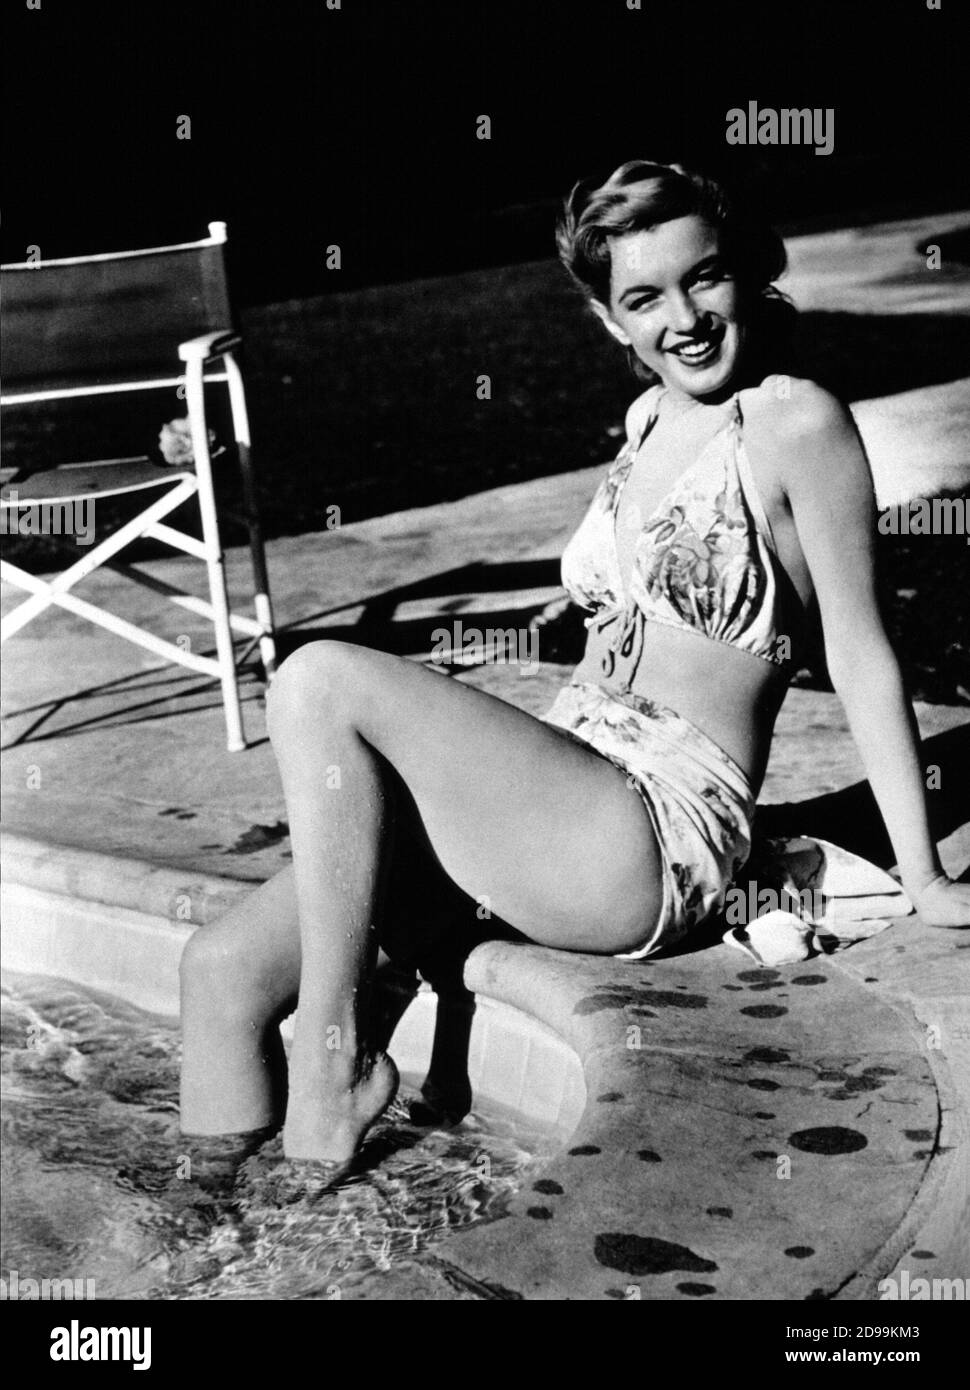 1947 : MARILYN  MONROE  ( 1926 - 1962 ) - movie actress - piscina - swimming pool - costume da bagno - swim-suit - swim suit - PIN UP - pin-up - leggy pose - gambe - bikini - due pezzi -----   Archivio GBB Stock Photo